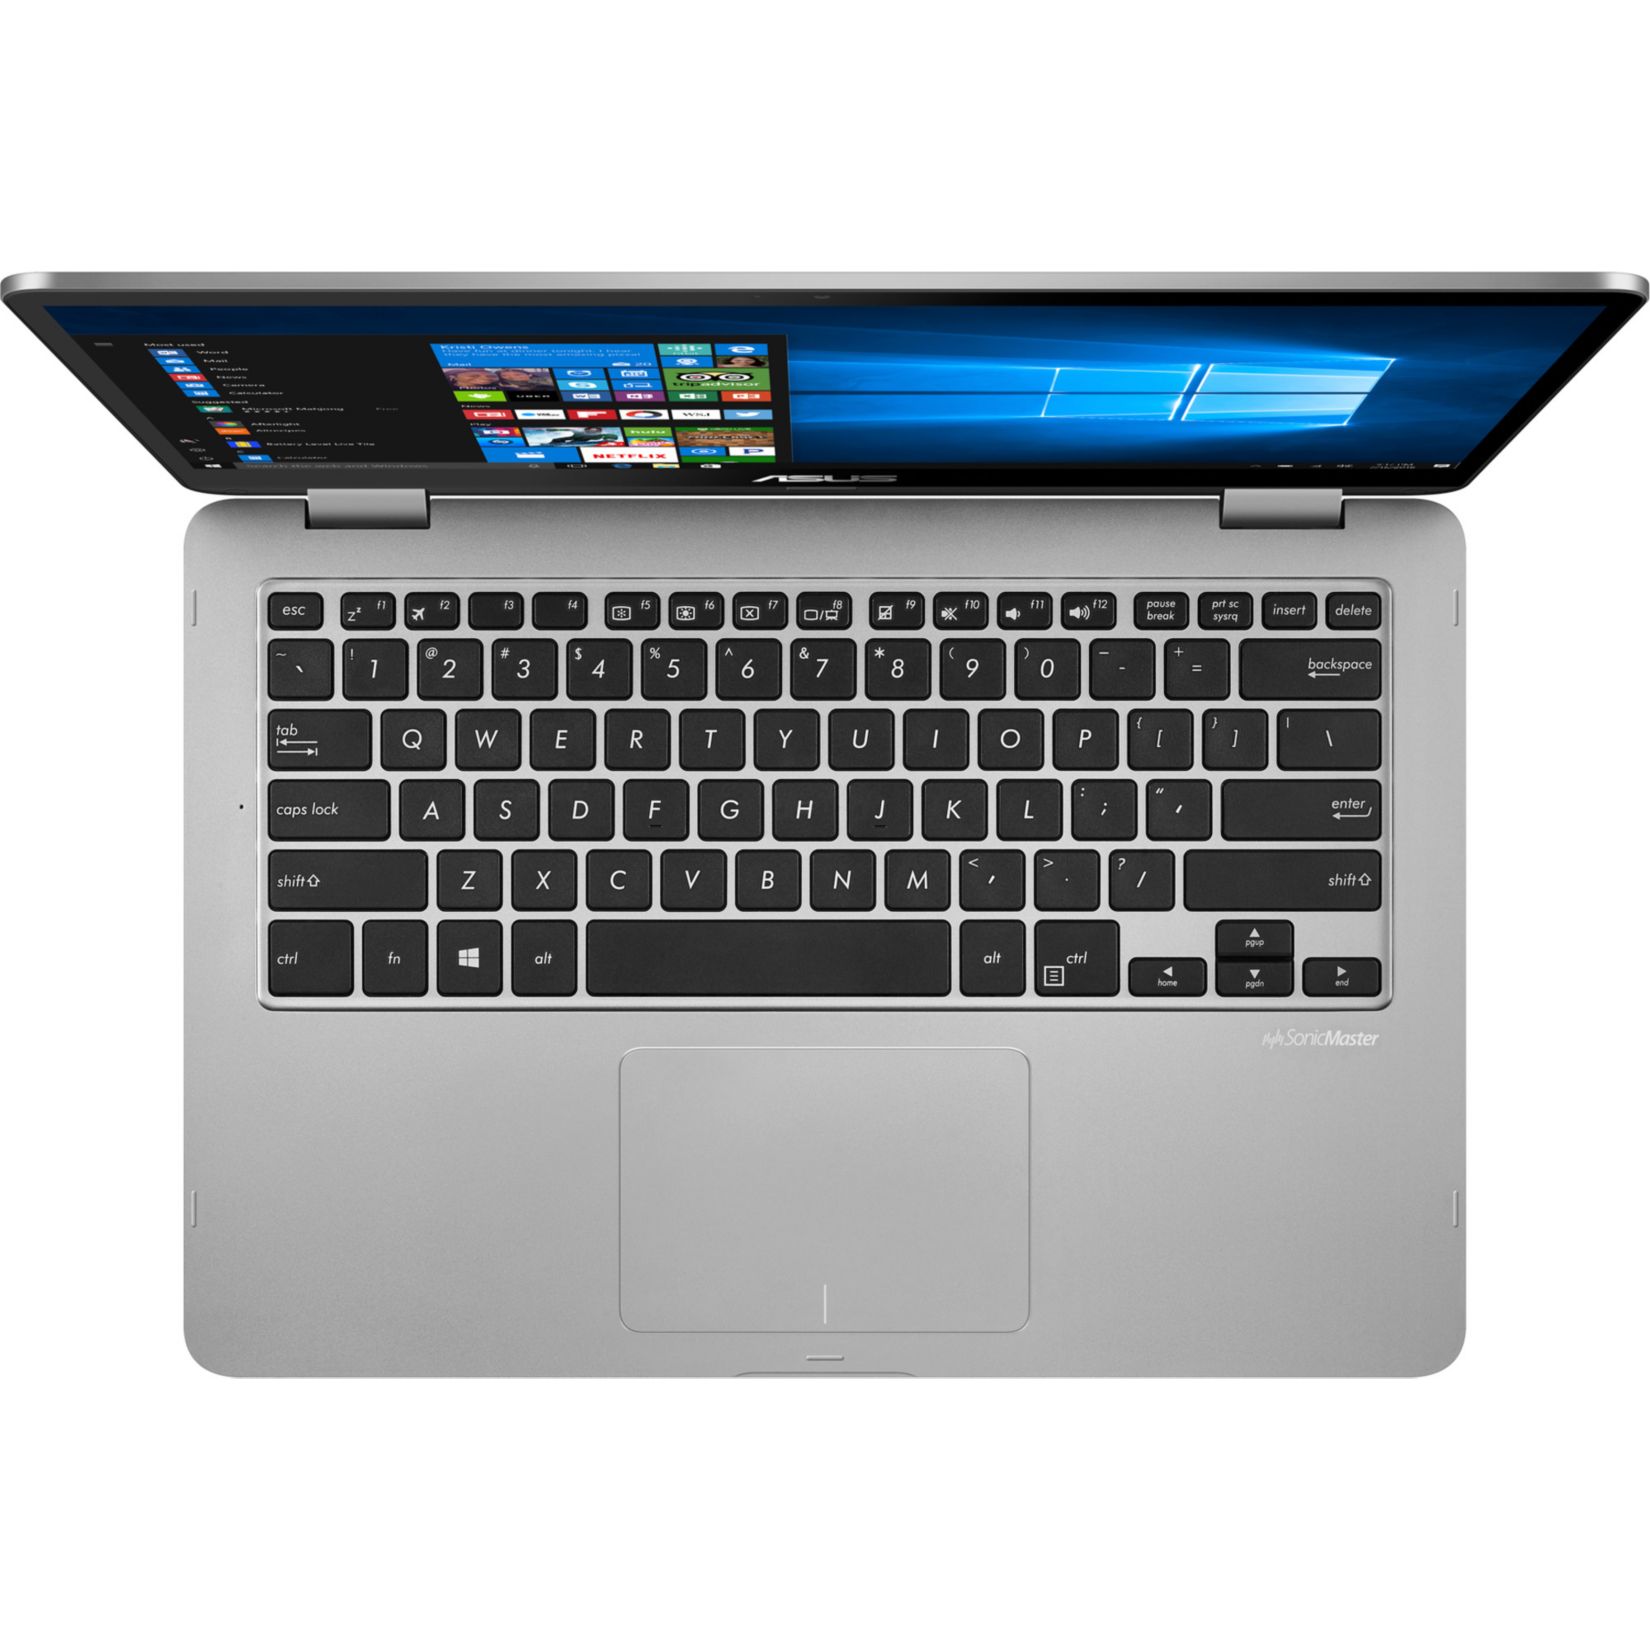 ASUS VivoBook Flip 14 | 14" Full HD | Intel Celeron N4020 | 4GB RAM | 128GB eMMC | Windows 10 Pro Education | Convertible Notebook